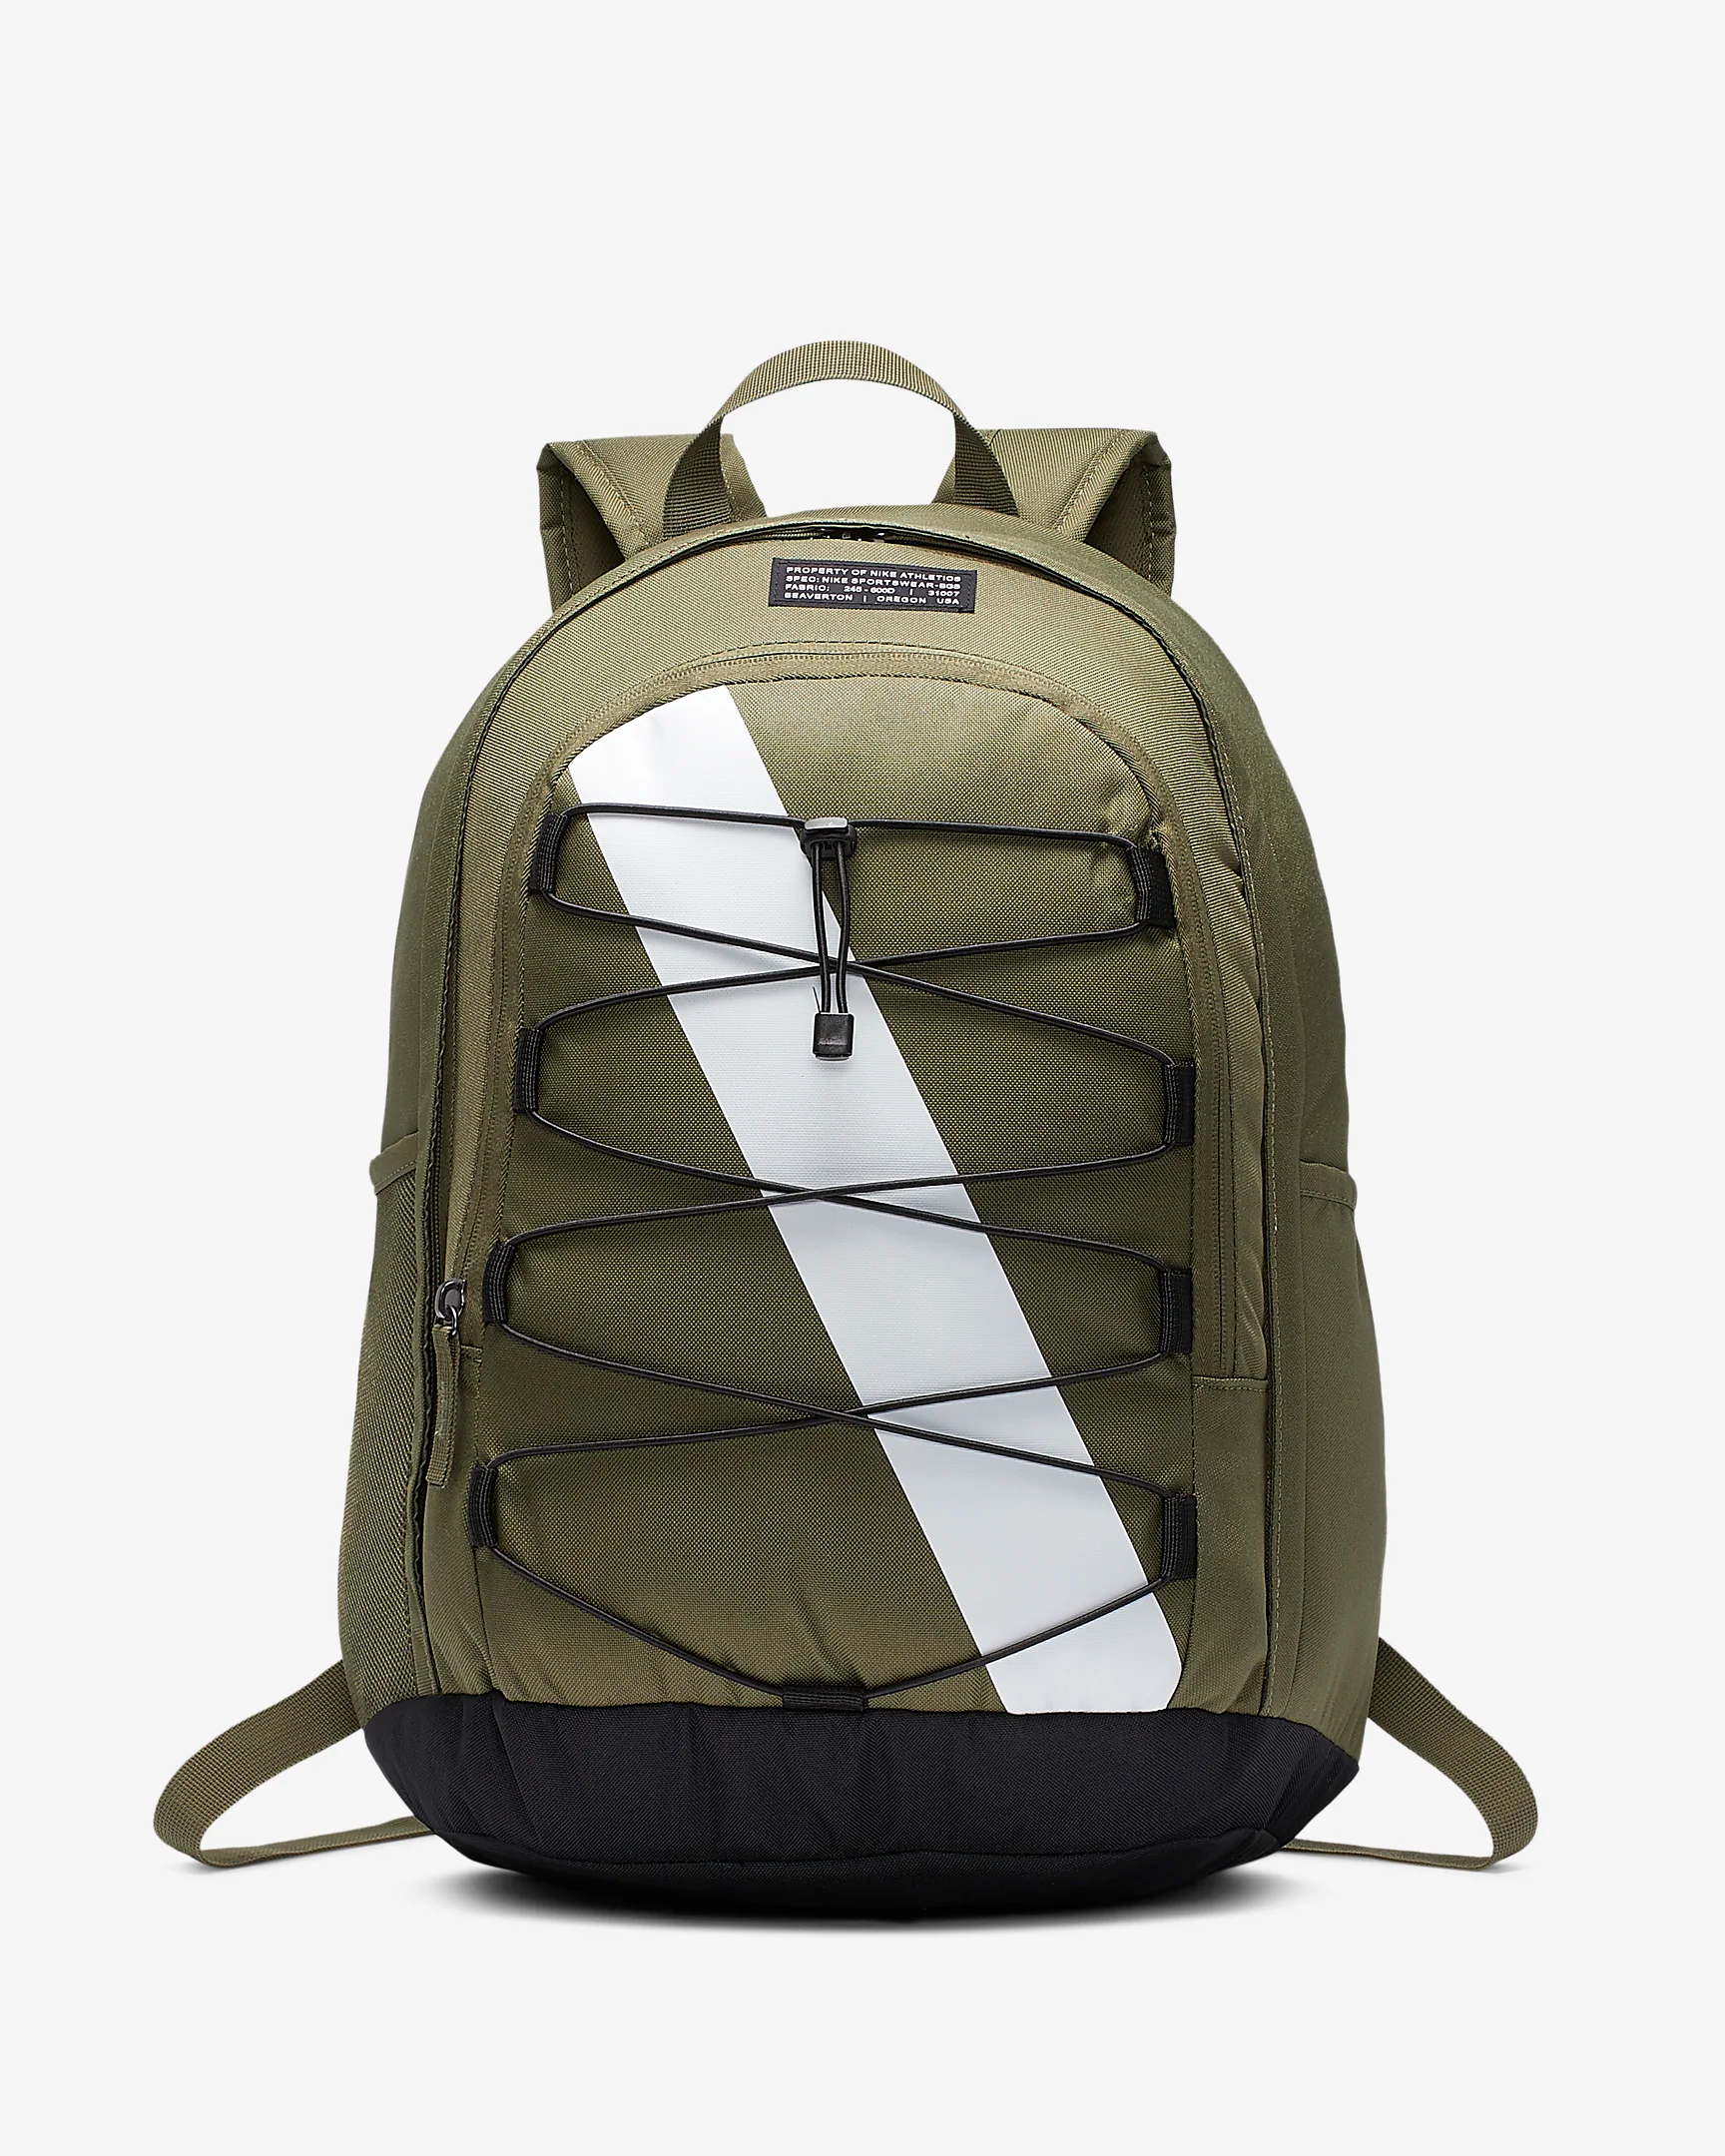 hayward-2-backpack-1DSxcG.png